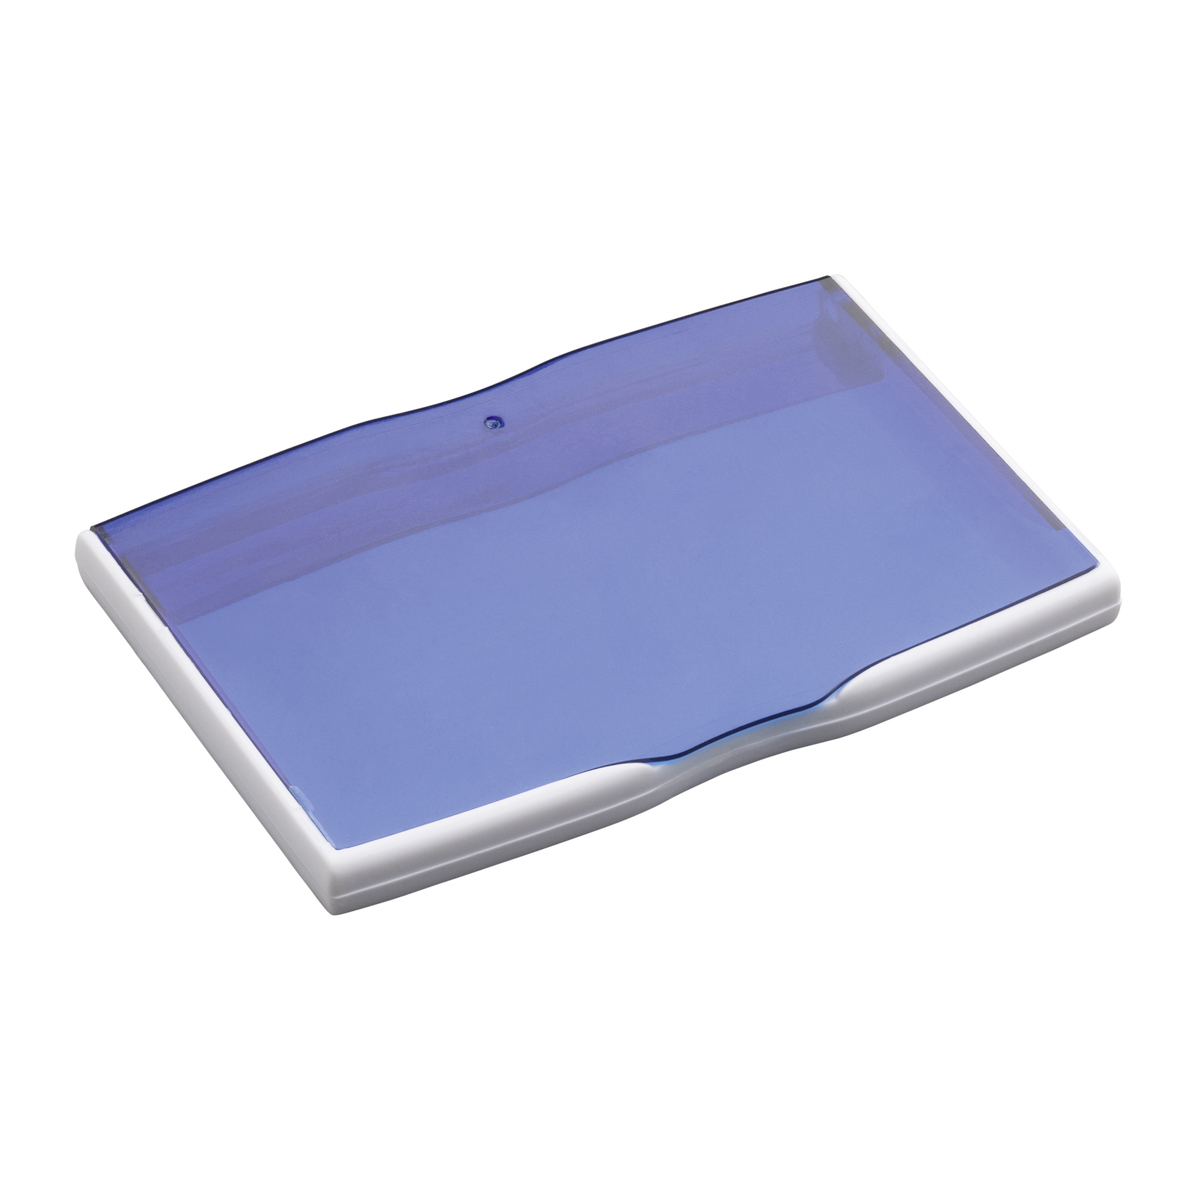 LM Visitenkartenbox REFLECTS-MELAKA WHITE BLUE blau, weiß, weiß/blau